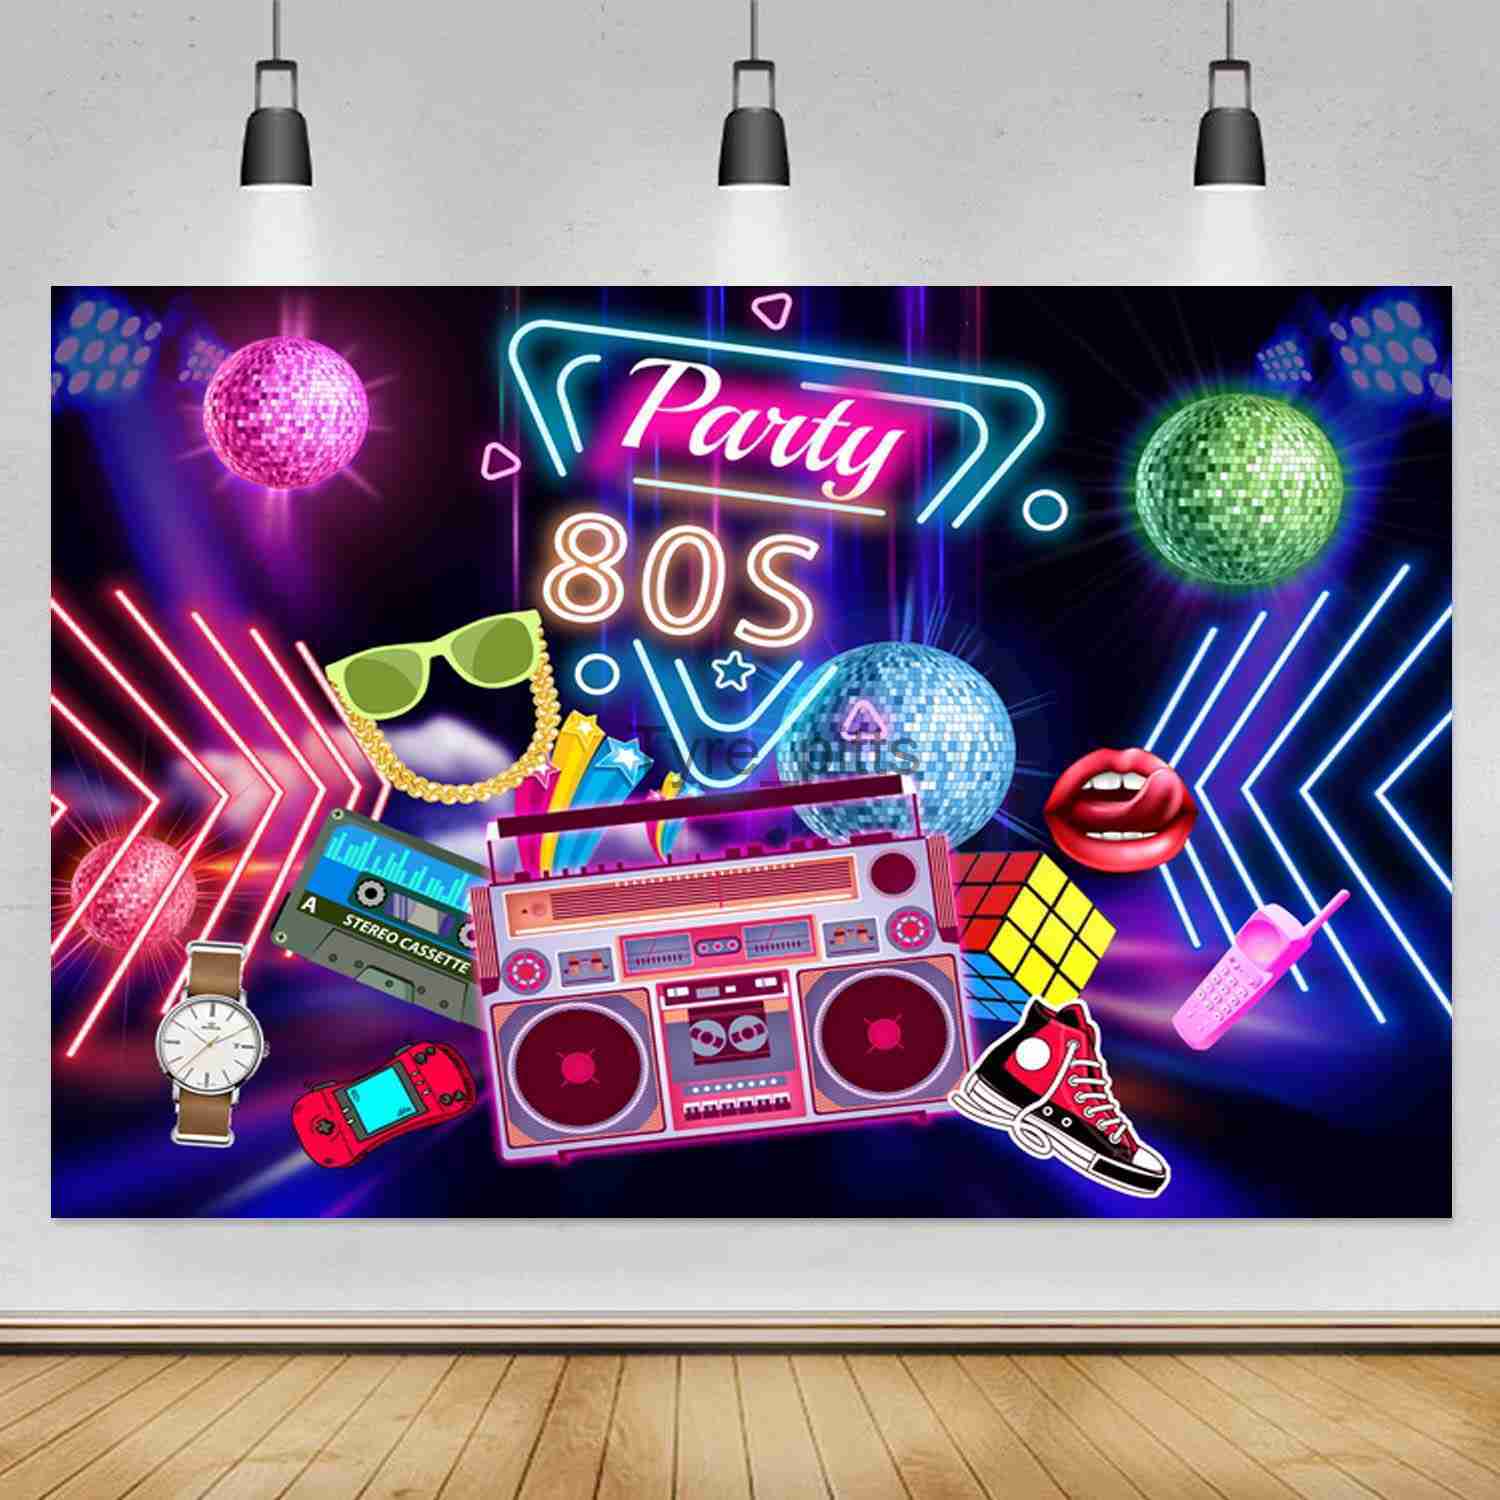 Achtergrondmateriaal Jaren 80 Party Achtergrond Disco Thema Retro Hip Hop Muziek Uitzending Fotografie Achtergrond Logo 1980 Neonlichten 80s Fotografie Rekwisieten X0725